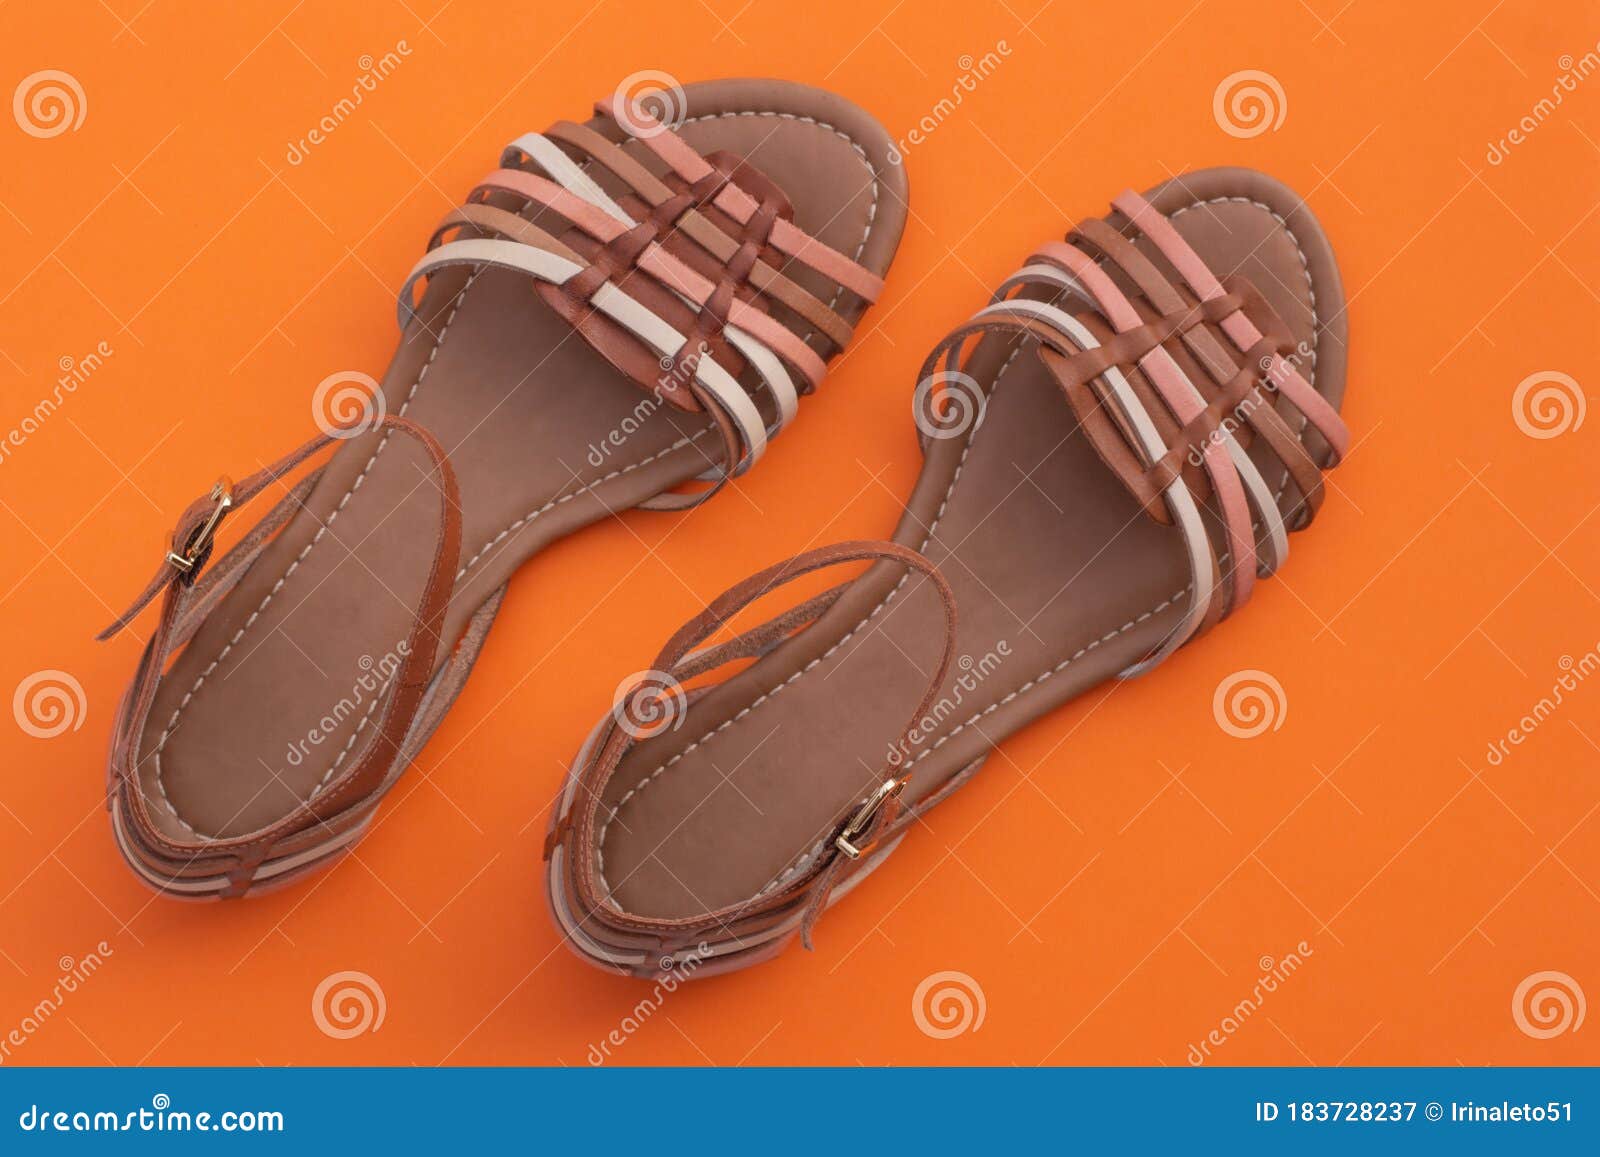 Women`s Sandals on an Orange Background. Summer Footwear Stock Image ...